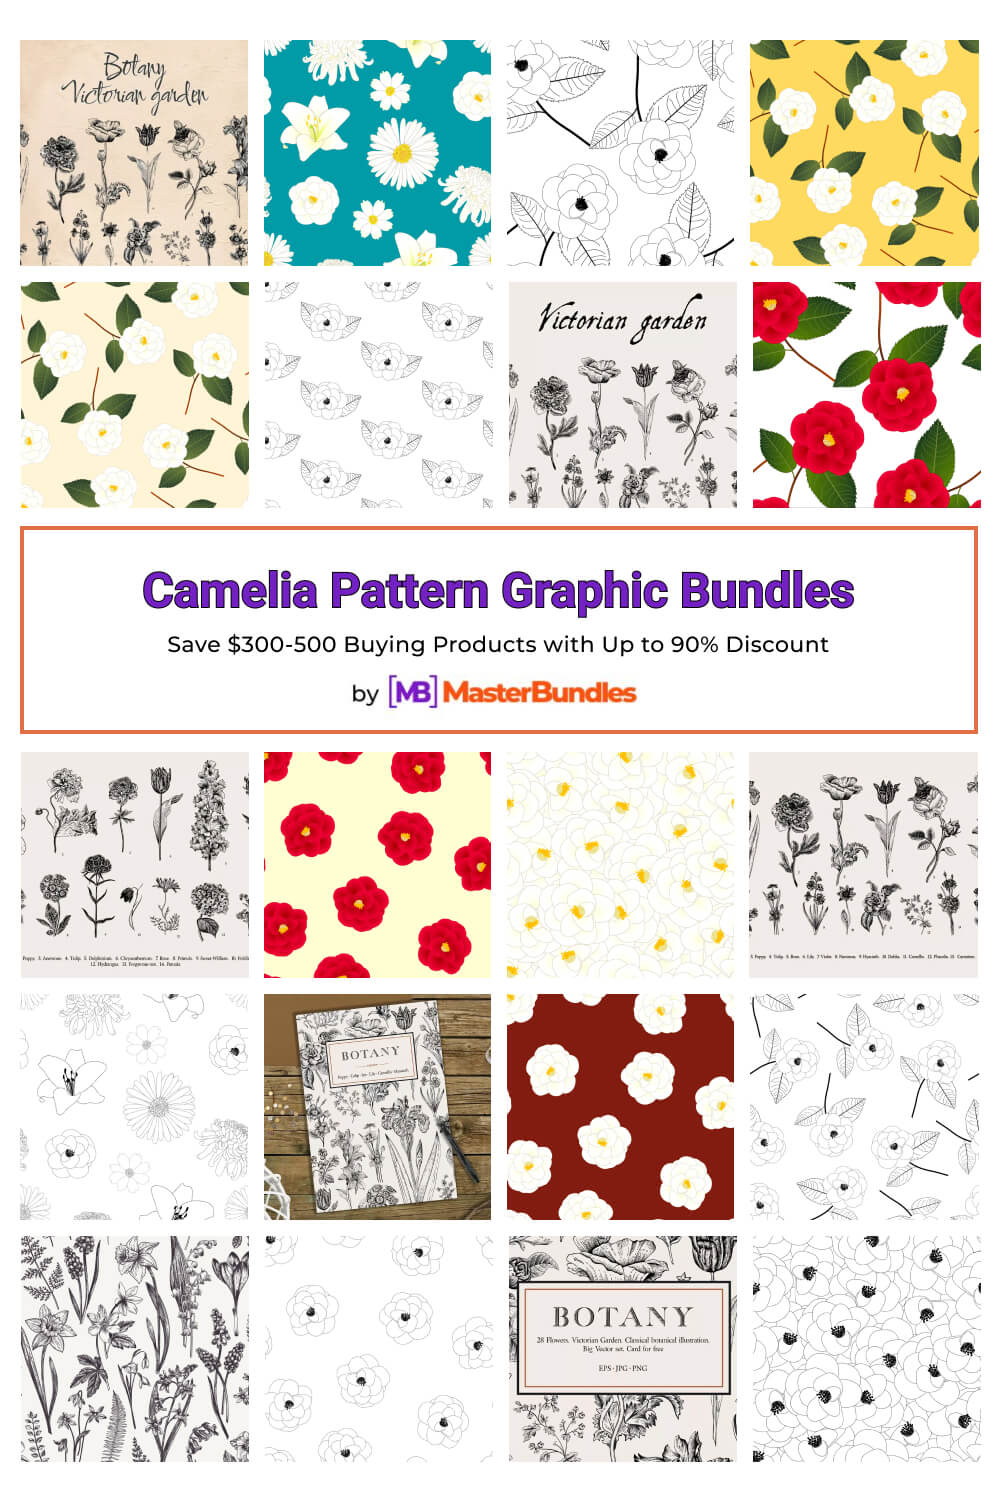 camelia pattern graphic bundles pinterest image.